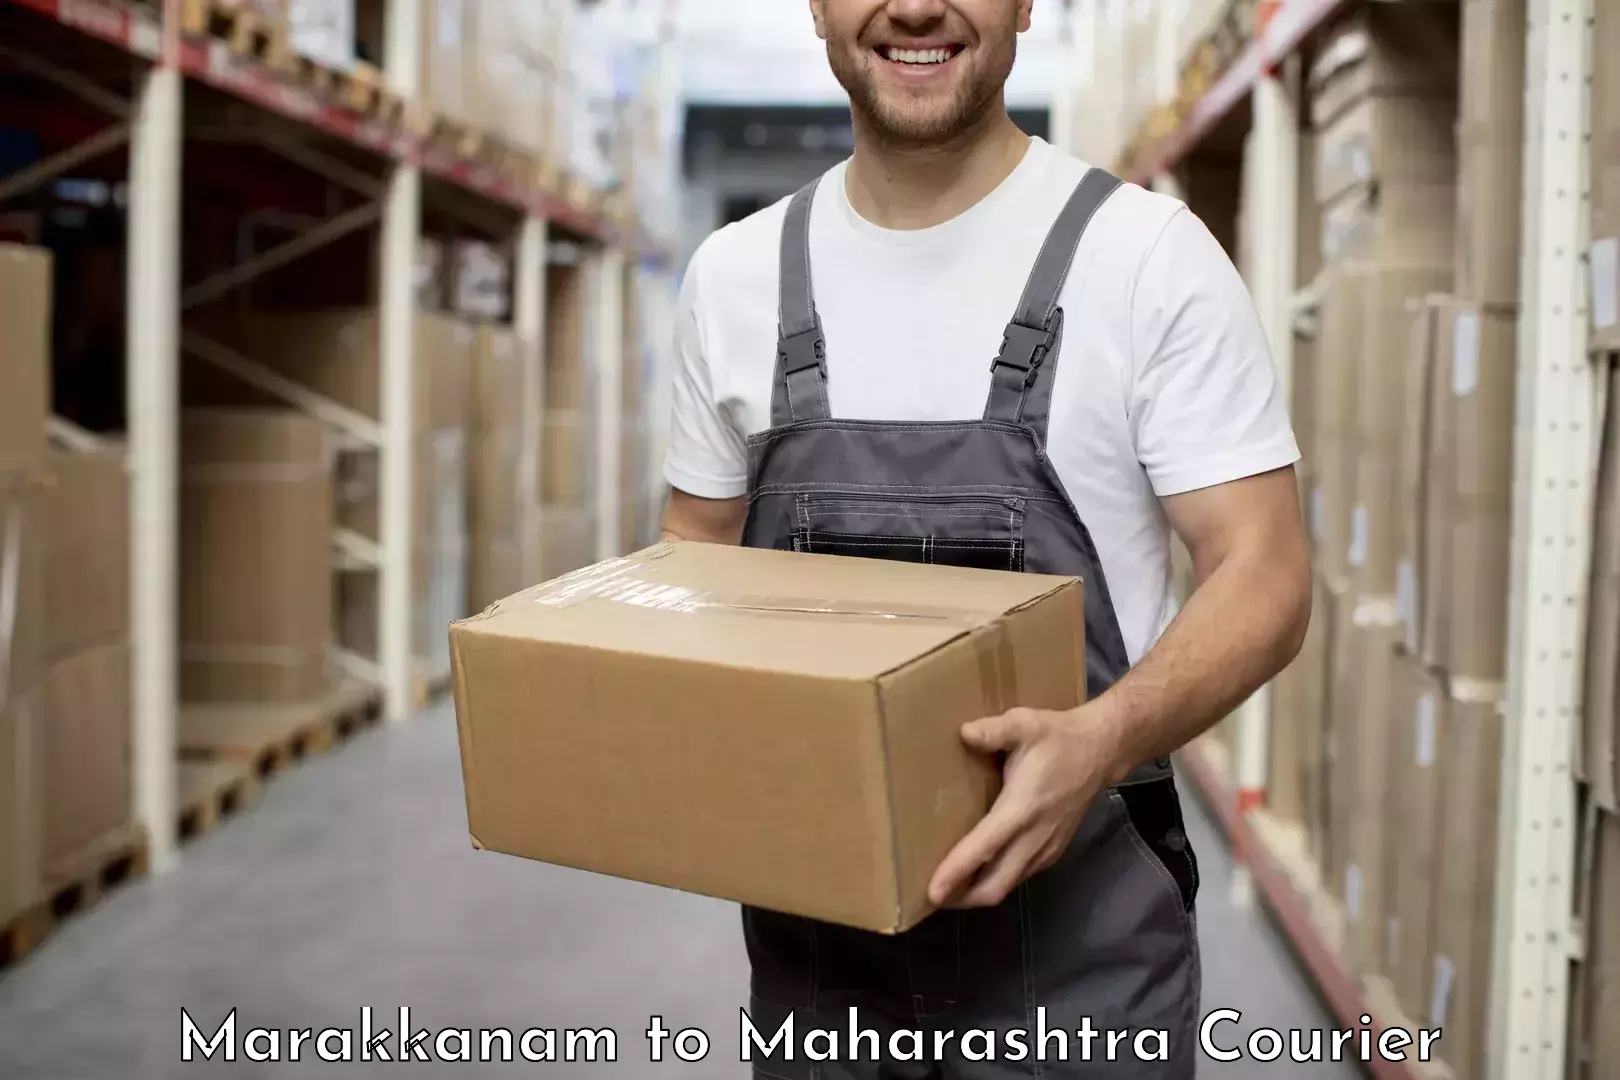 Express logistics providers Marakkanam to Chembur